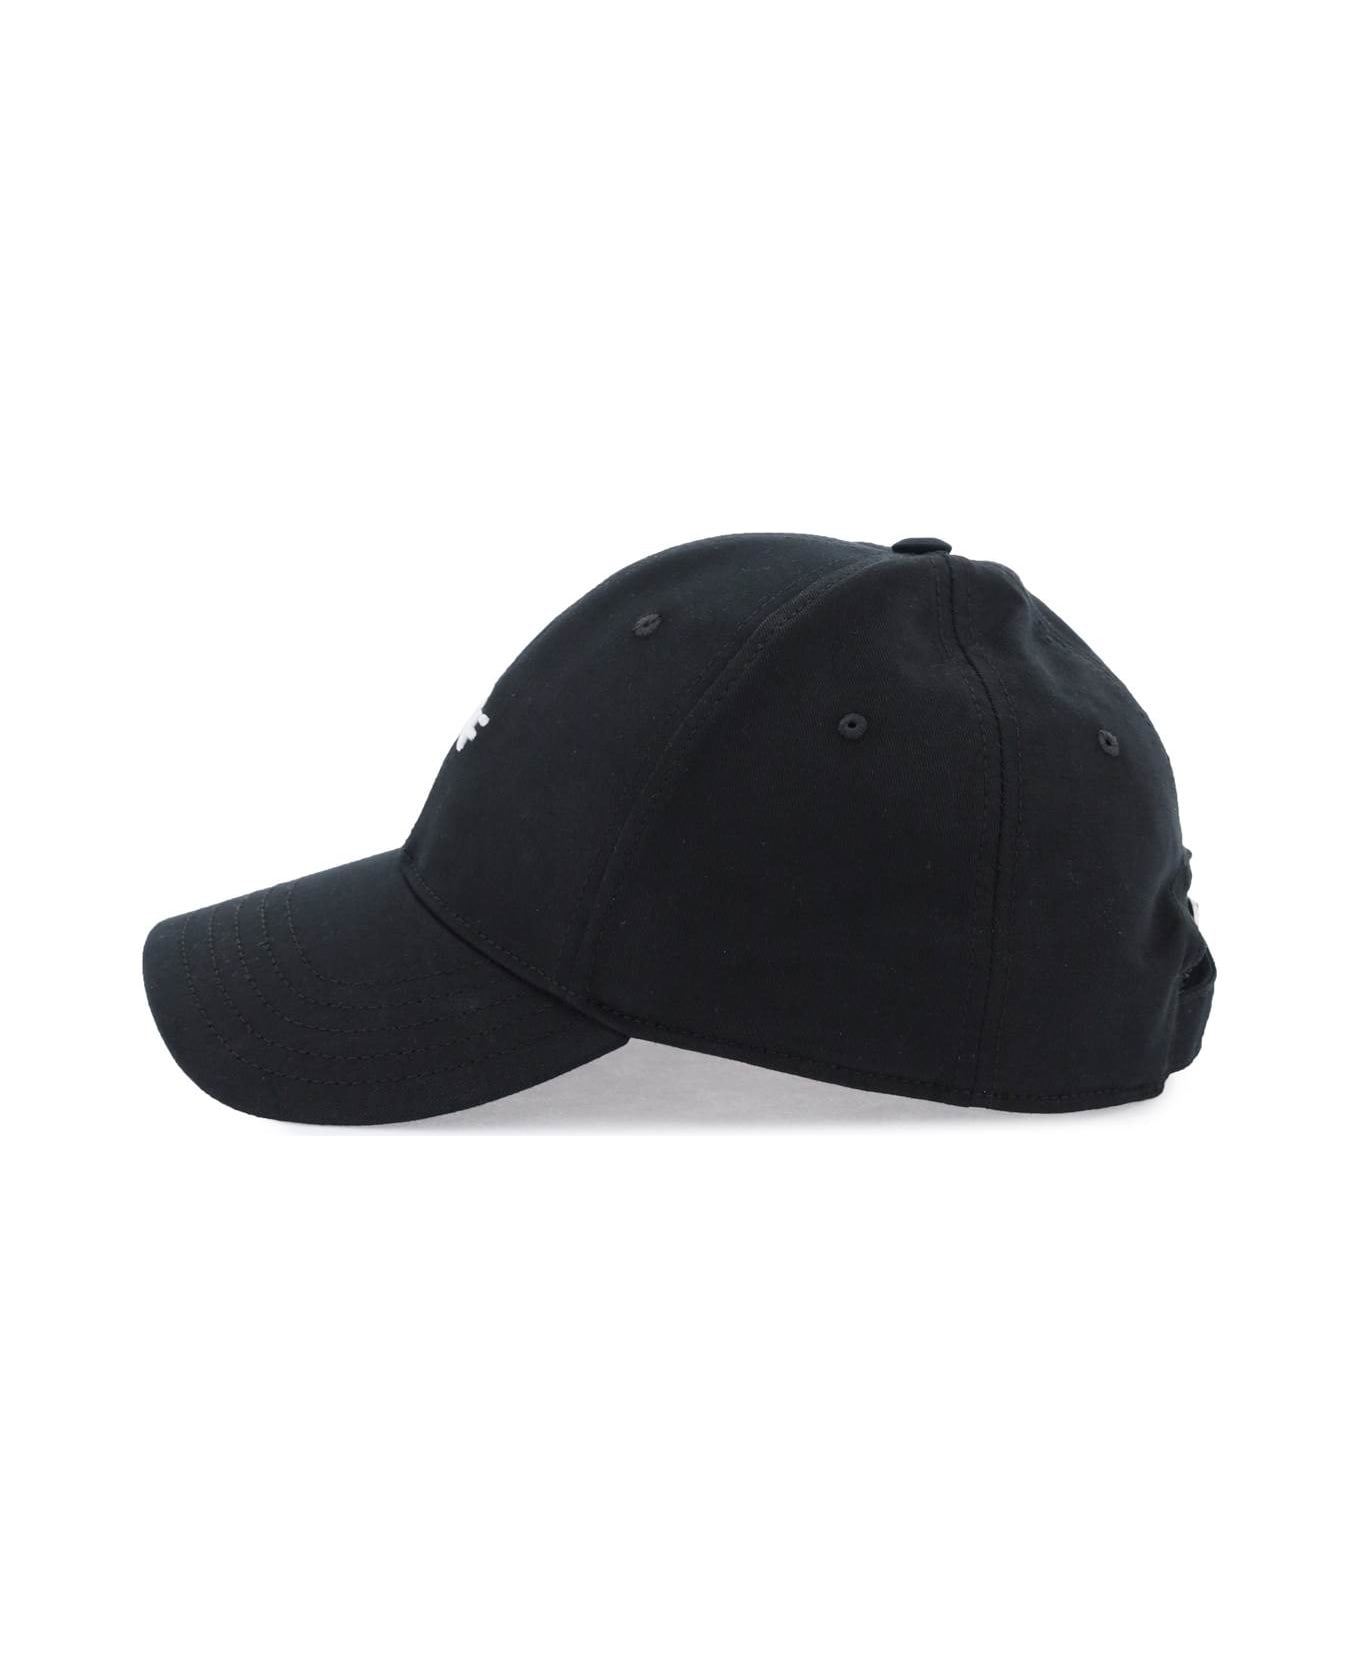 Off-White Logo Baseball Cap - black 帽子